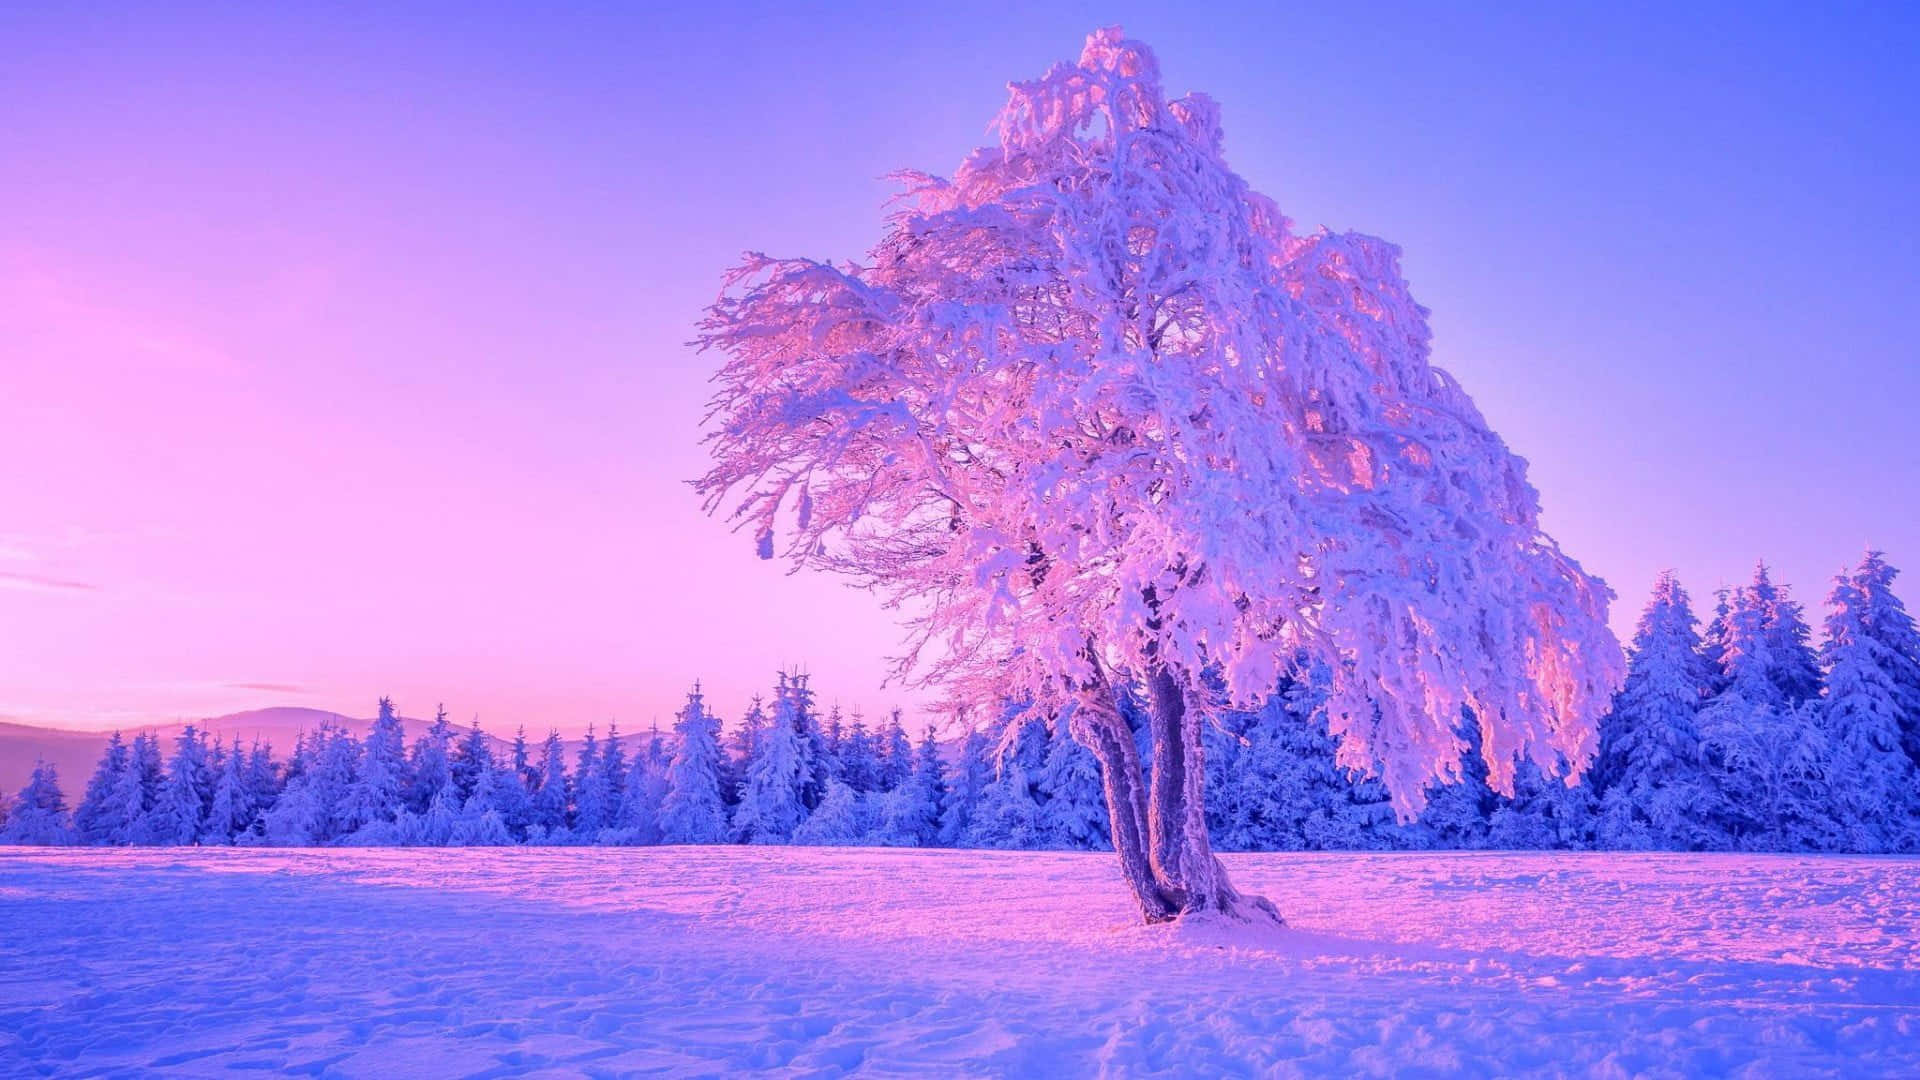 Enjoying the Natural Beauty of Winter